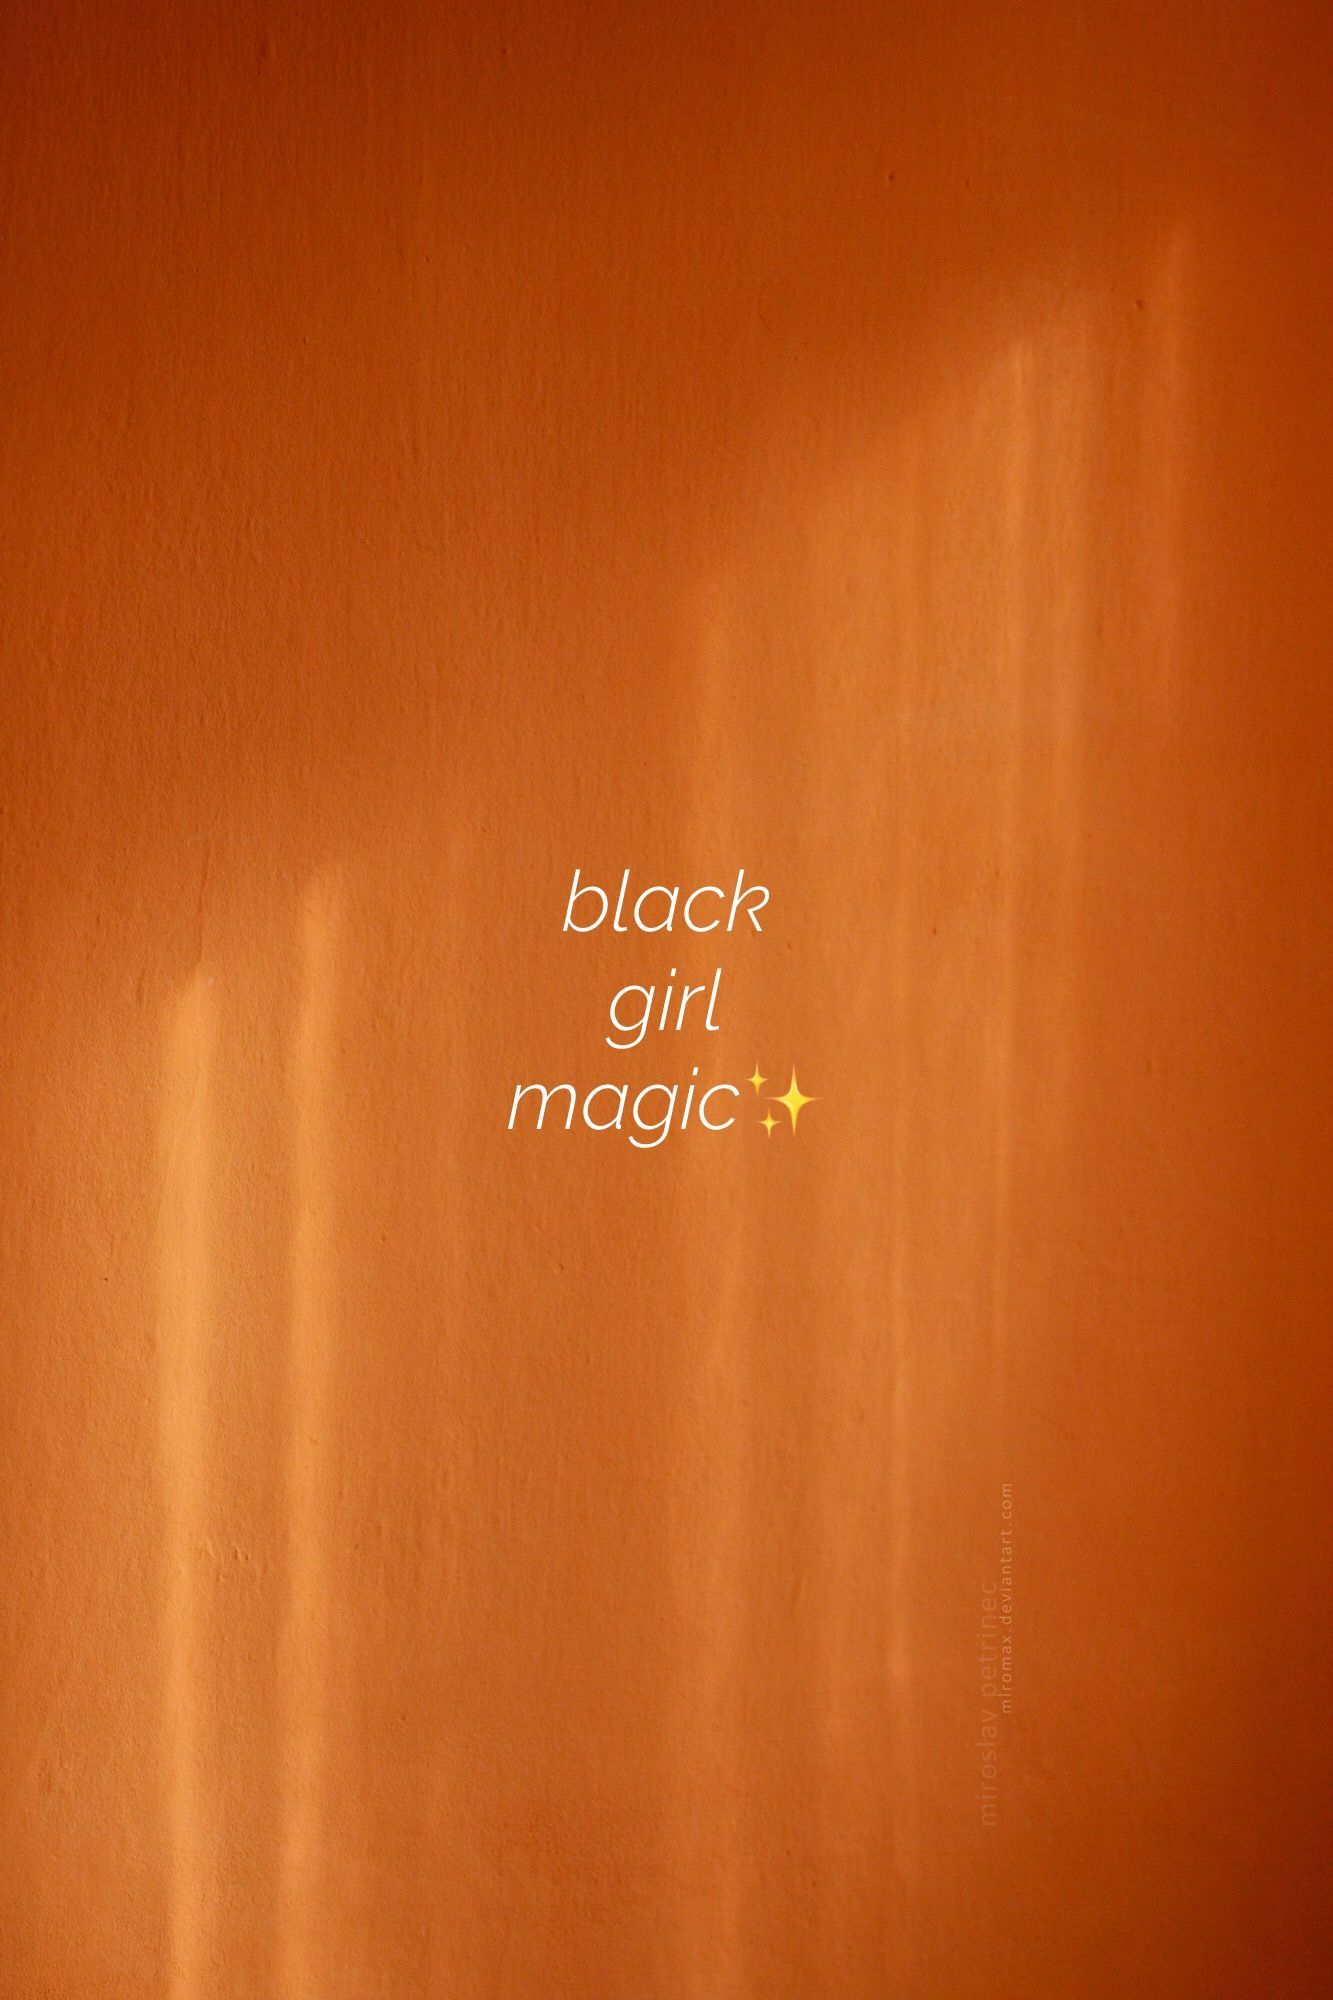 black girl magic✨ Made by me. Black girl magic, Magic aesthetic, Black girl quotes